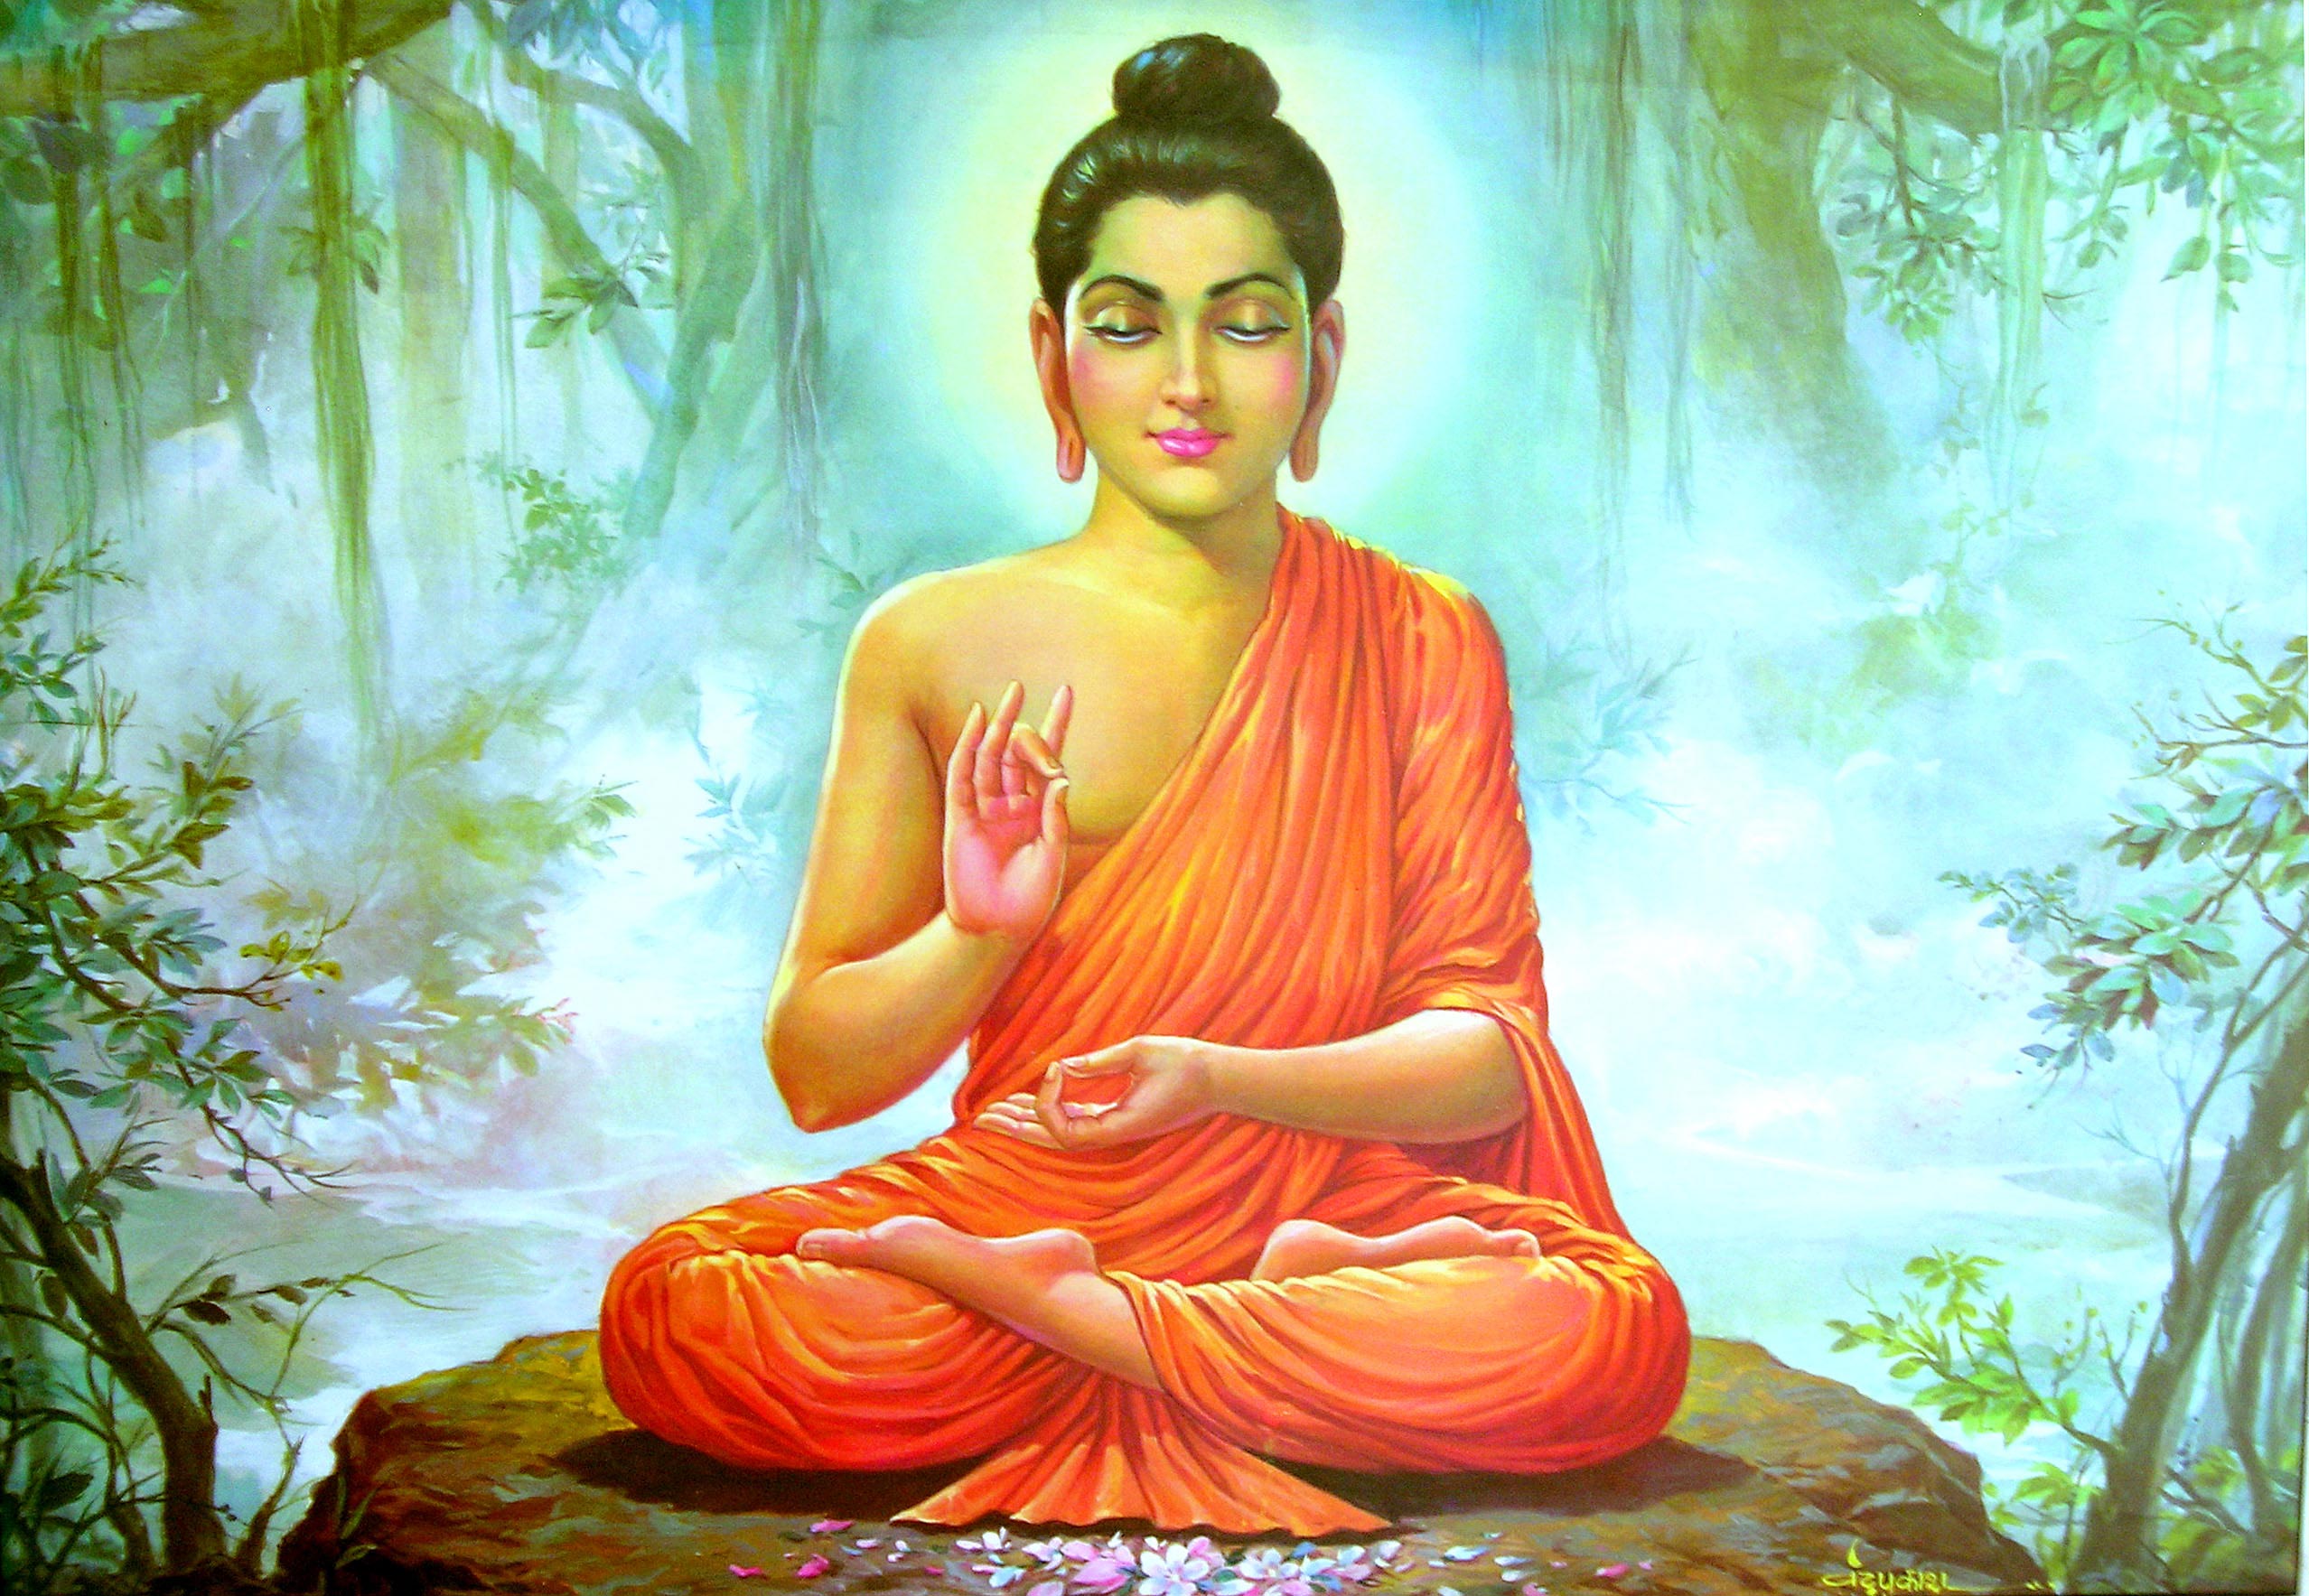 buddhism, religious 2160p